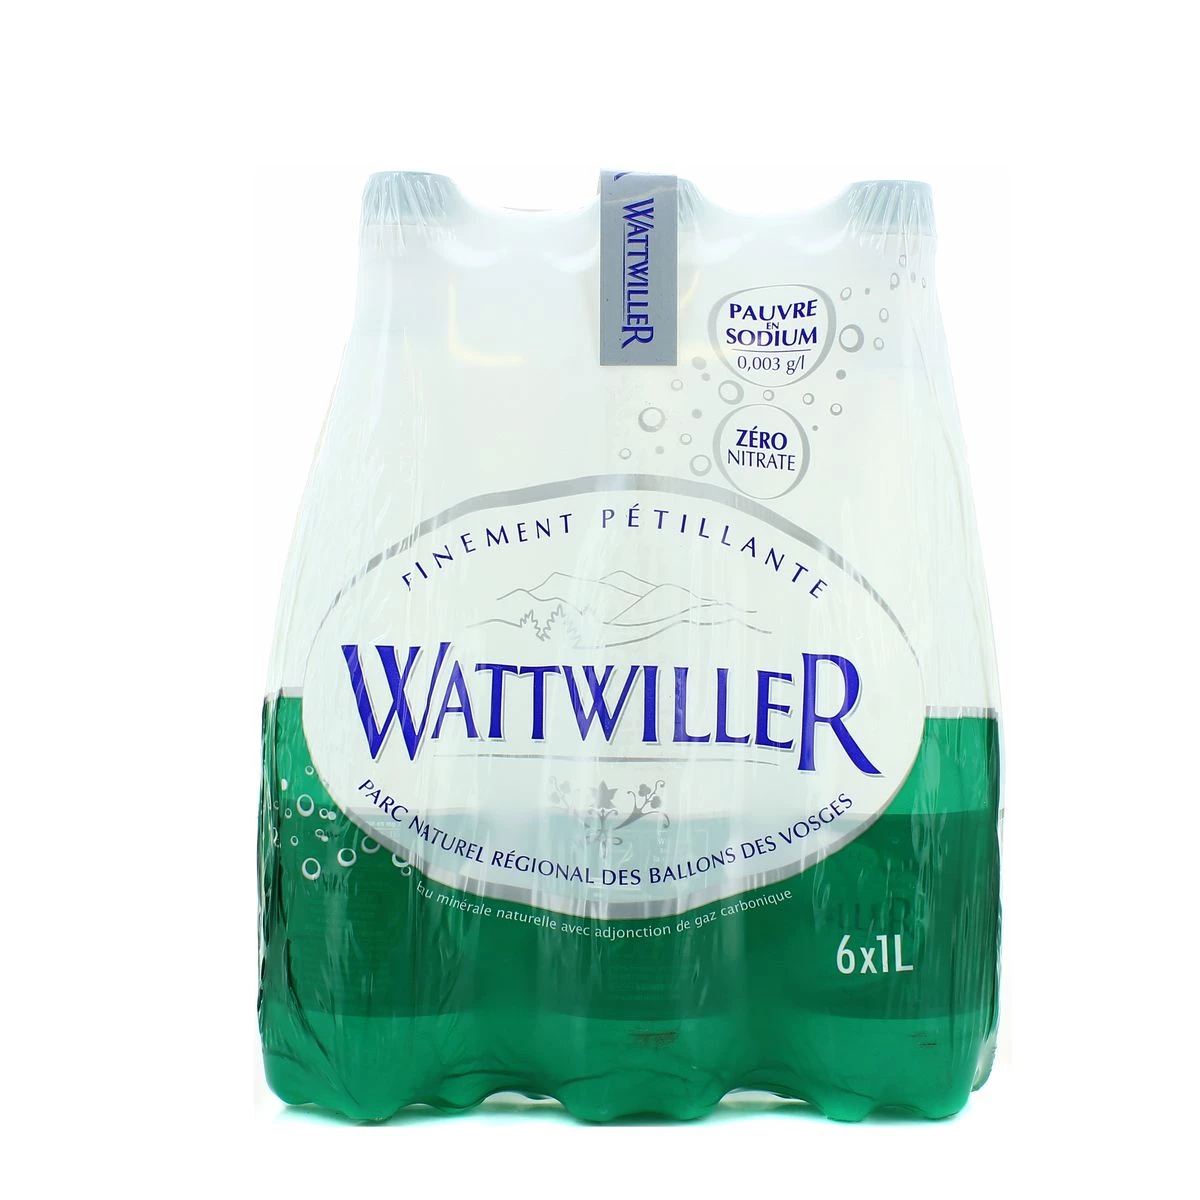 Finely sparkling sparkling mineral water 6x1l - WATTWILLER